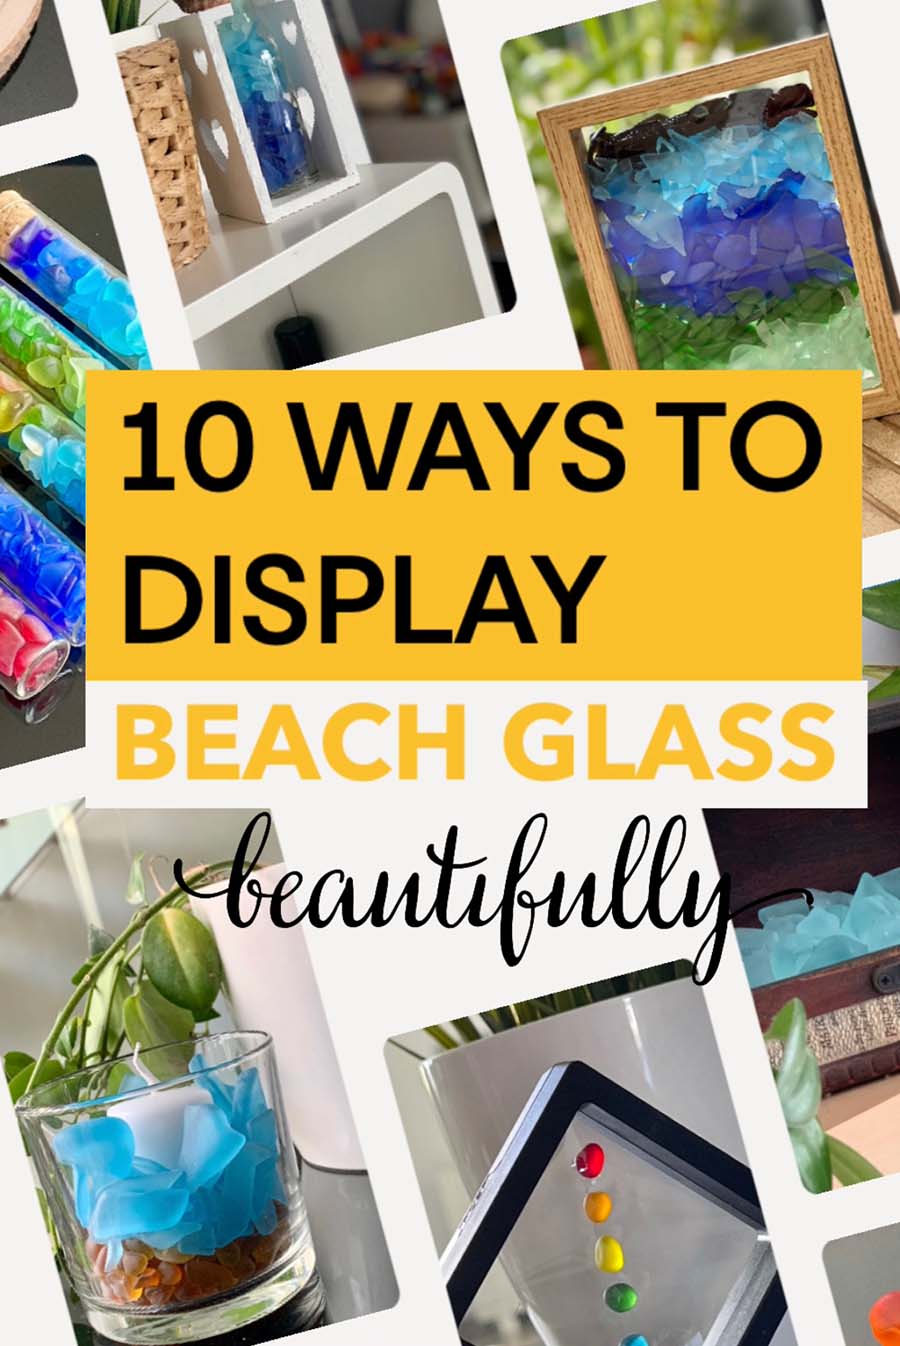 Sea Glass and Beach Glass